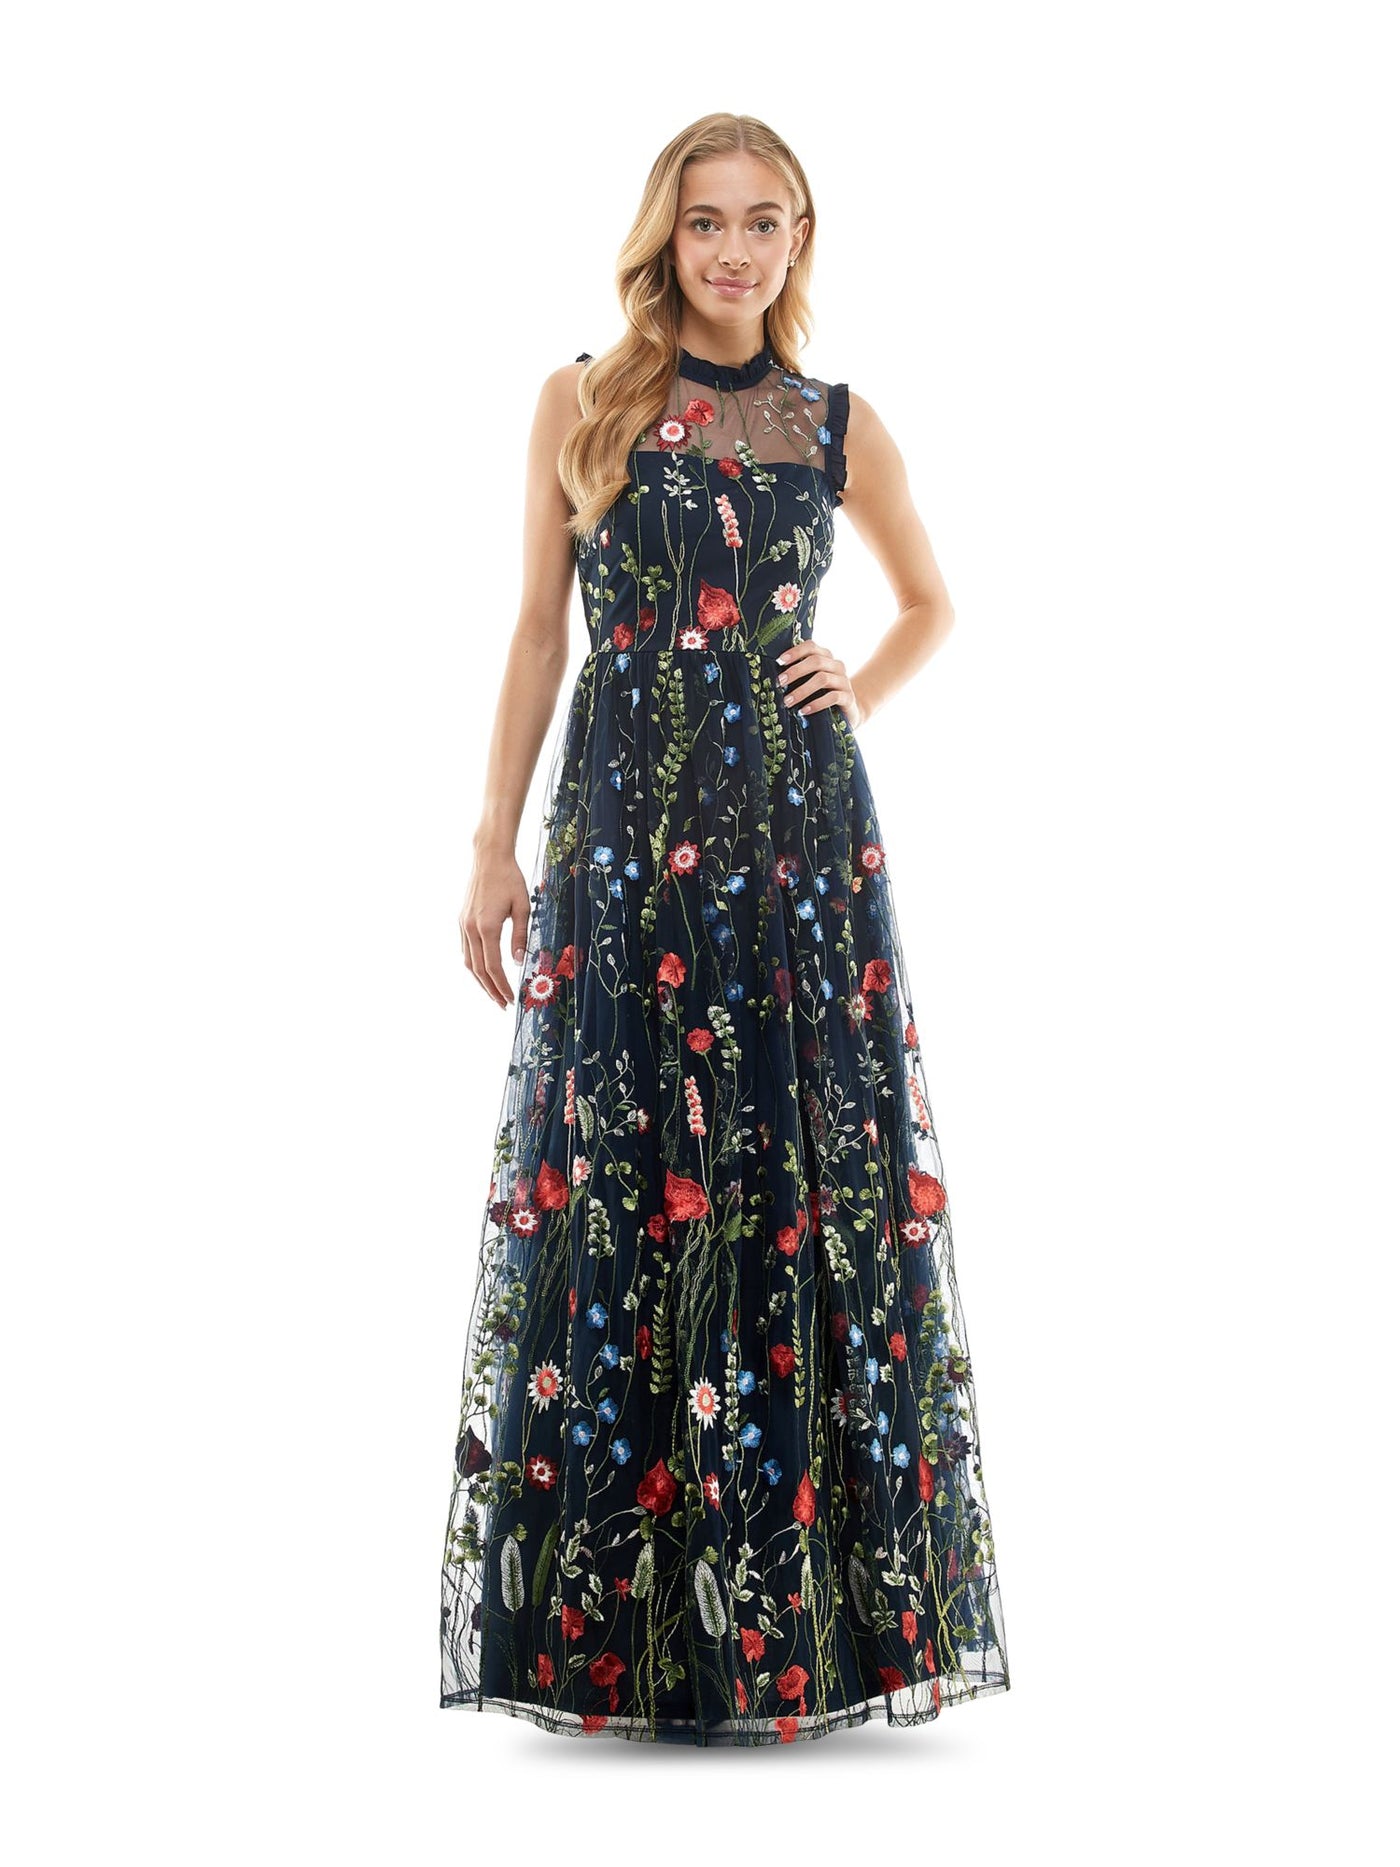 CITY STUDIO Womens Navy Embroidered Ruffled Trim Floral Sleeveless Illusion Neckline Full-Length Evening Dress Juniors 1